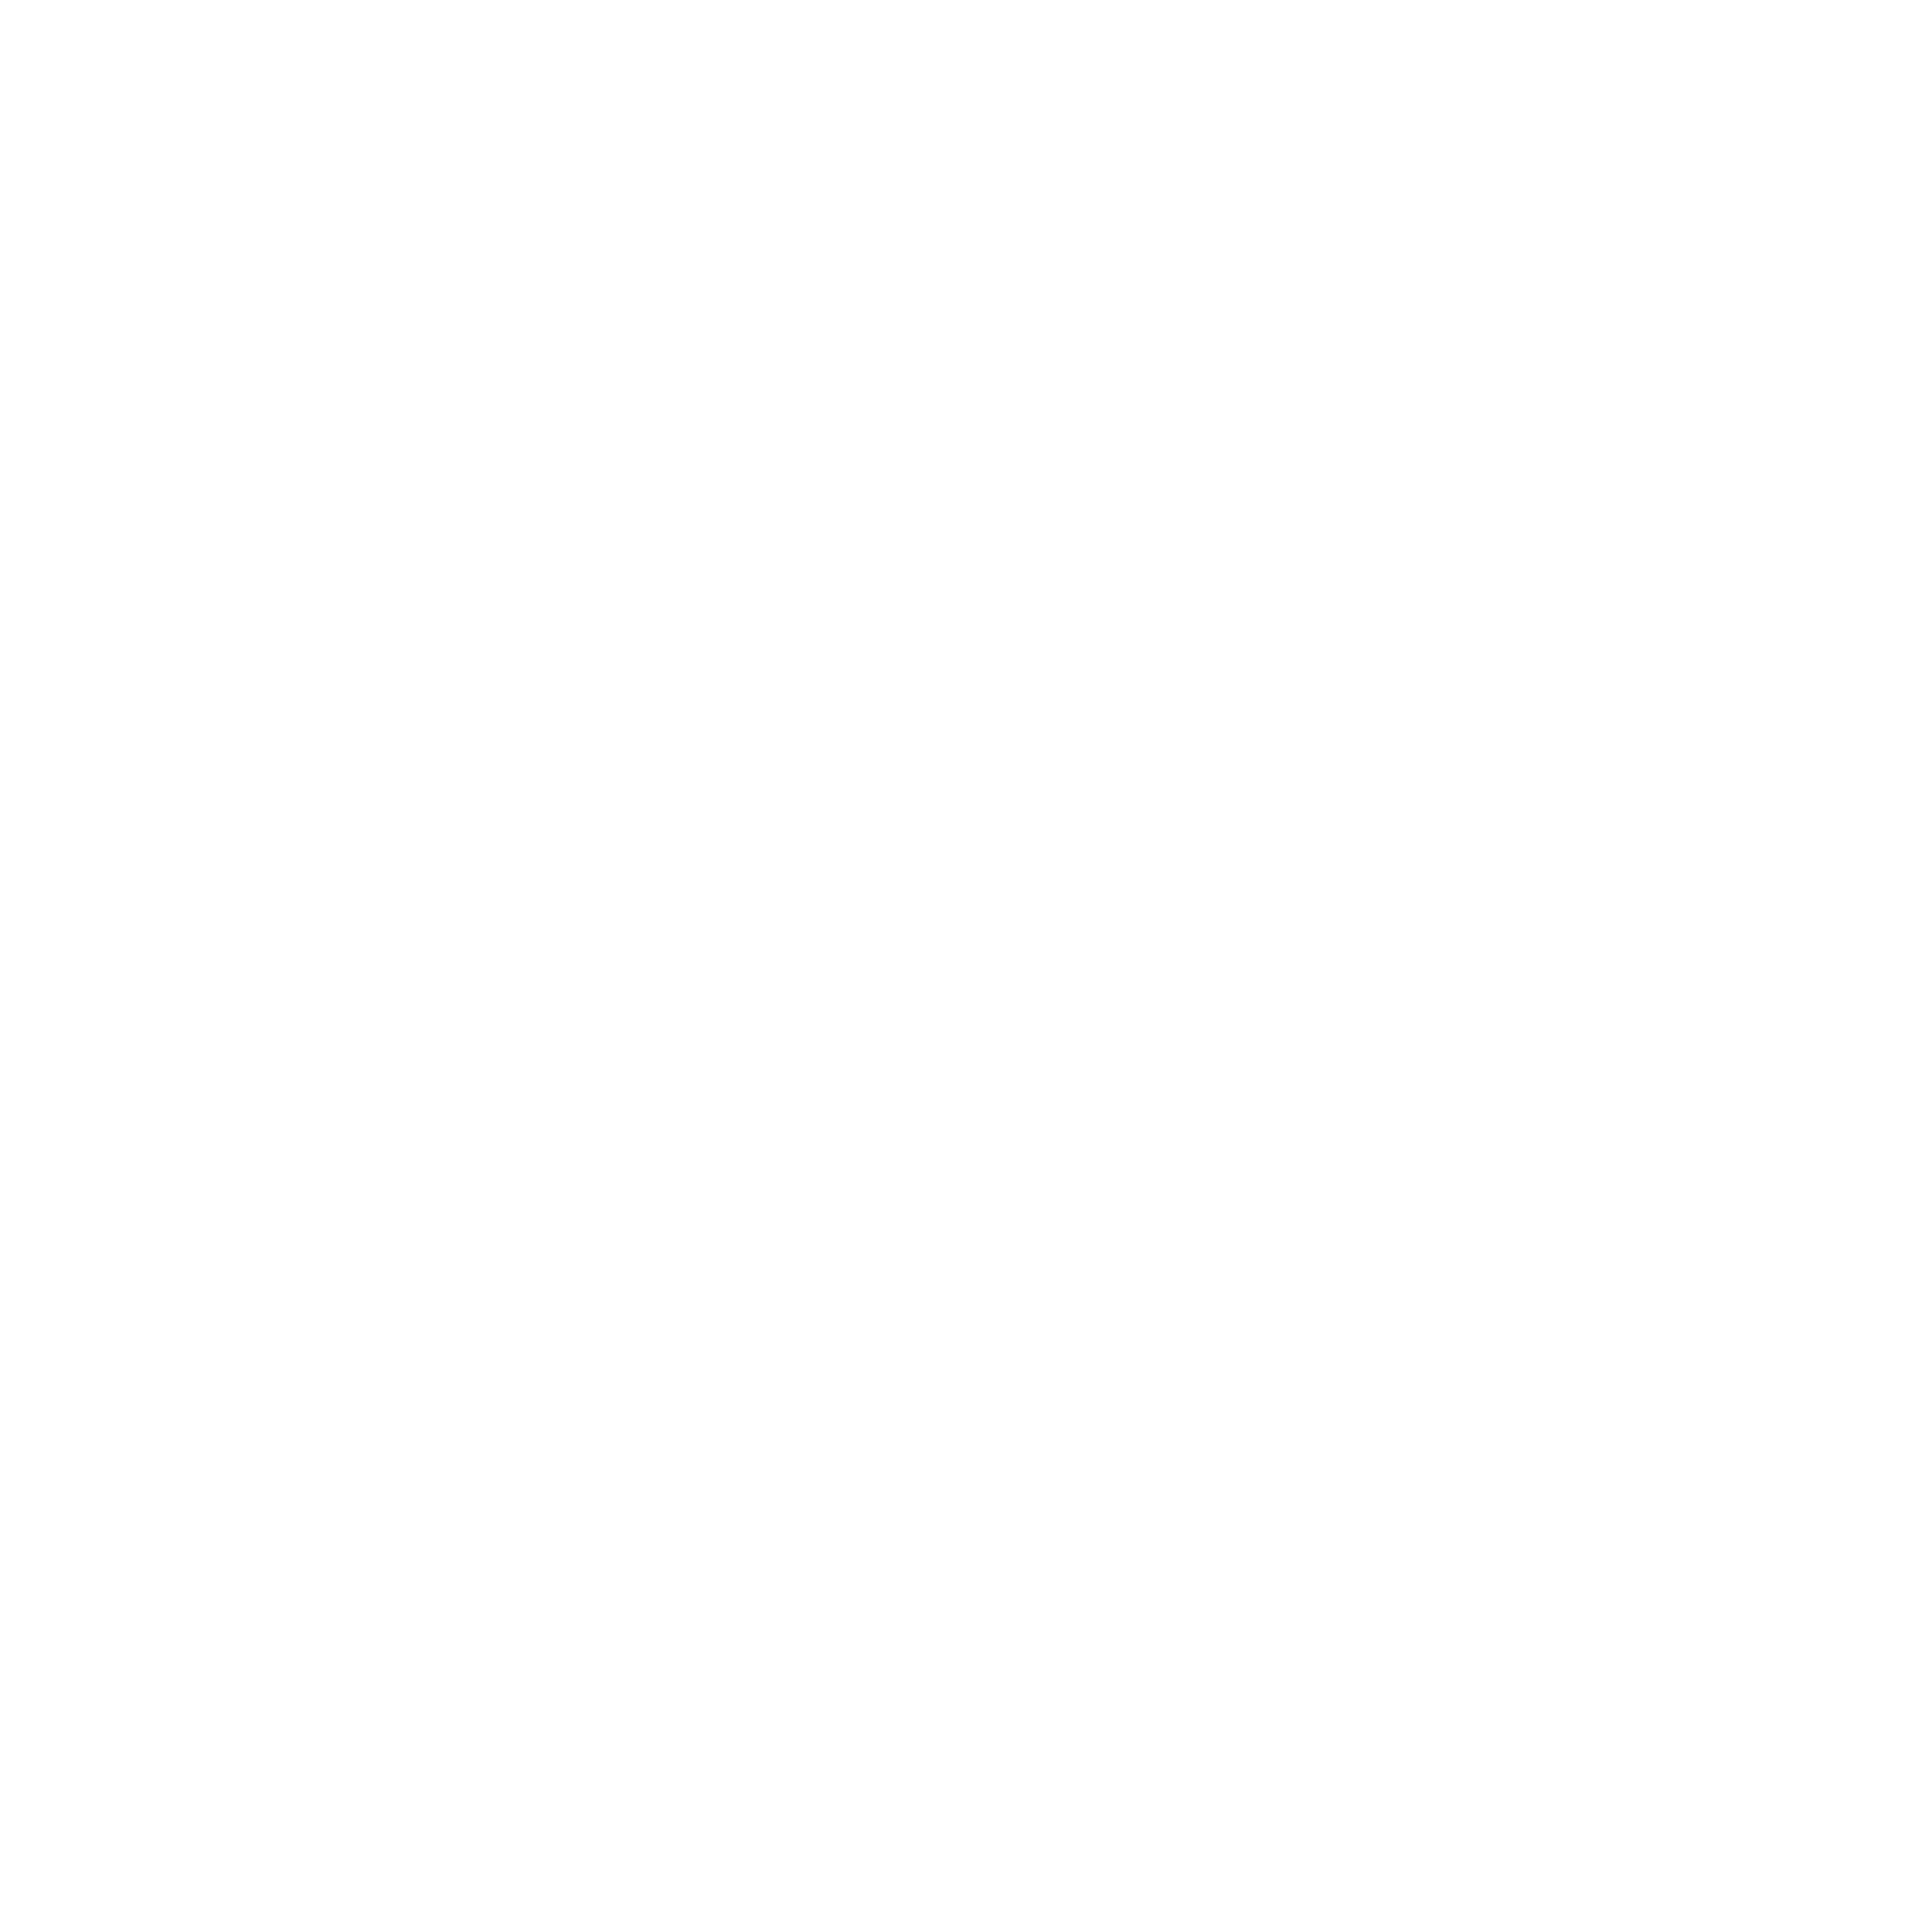 Hart-logos-black-trans3.png